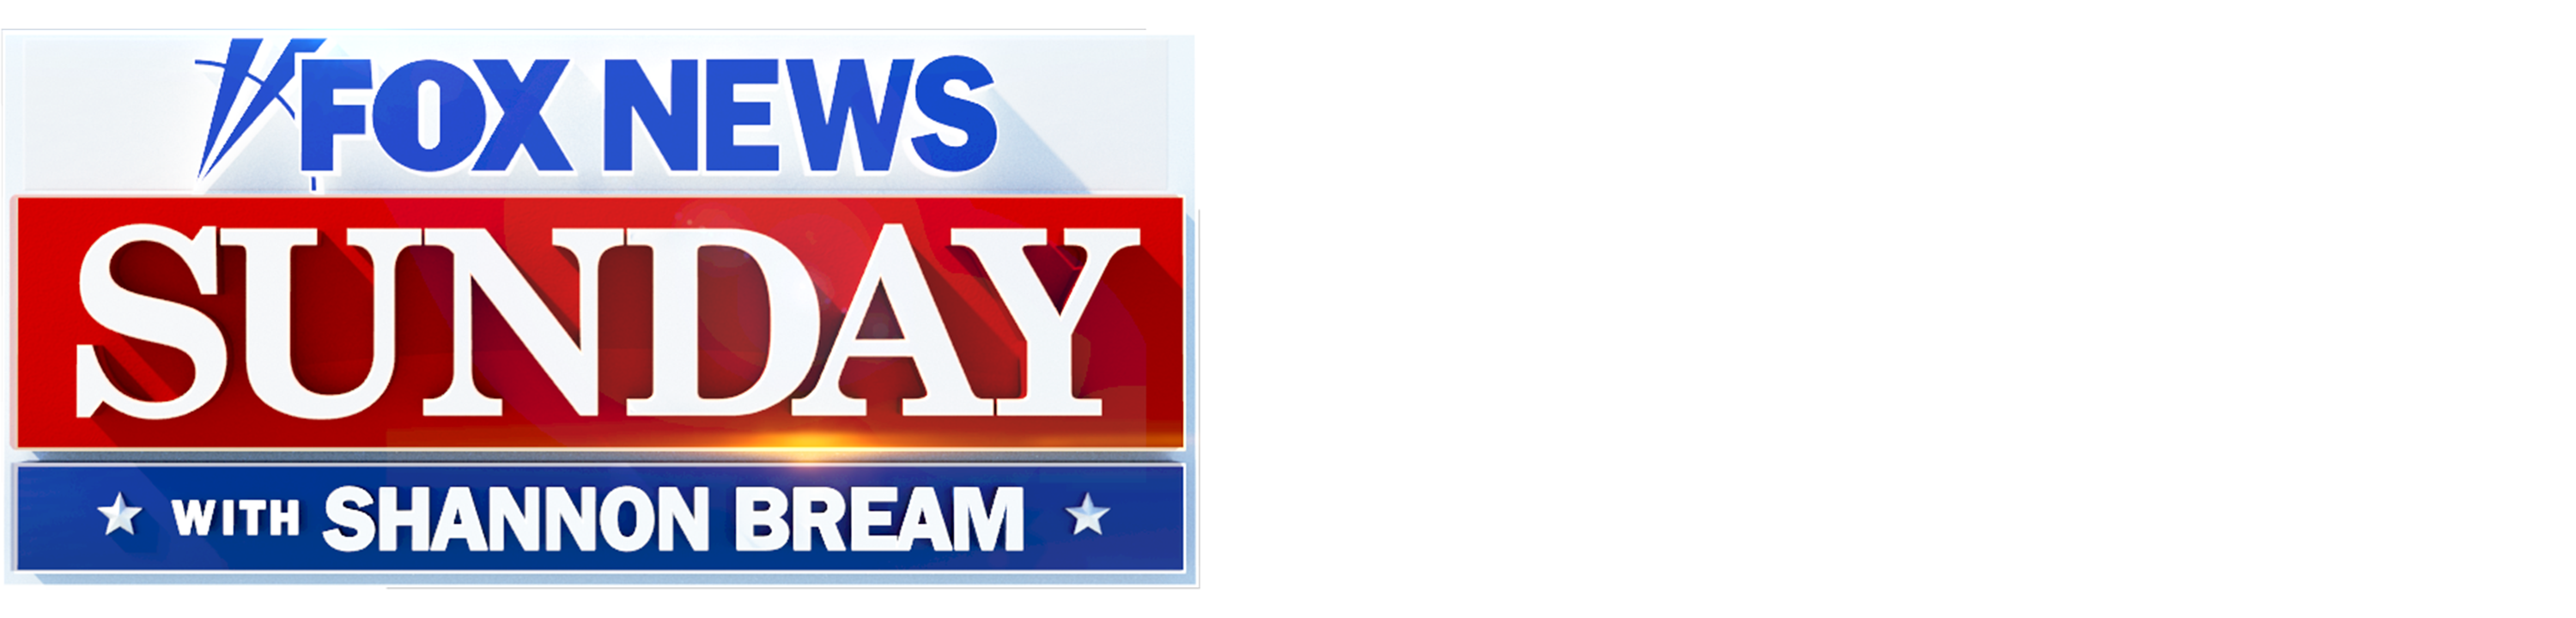 FOX News Sunday logo